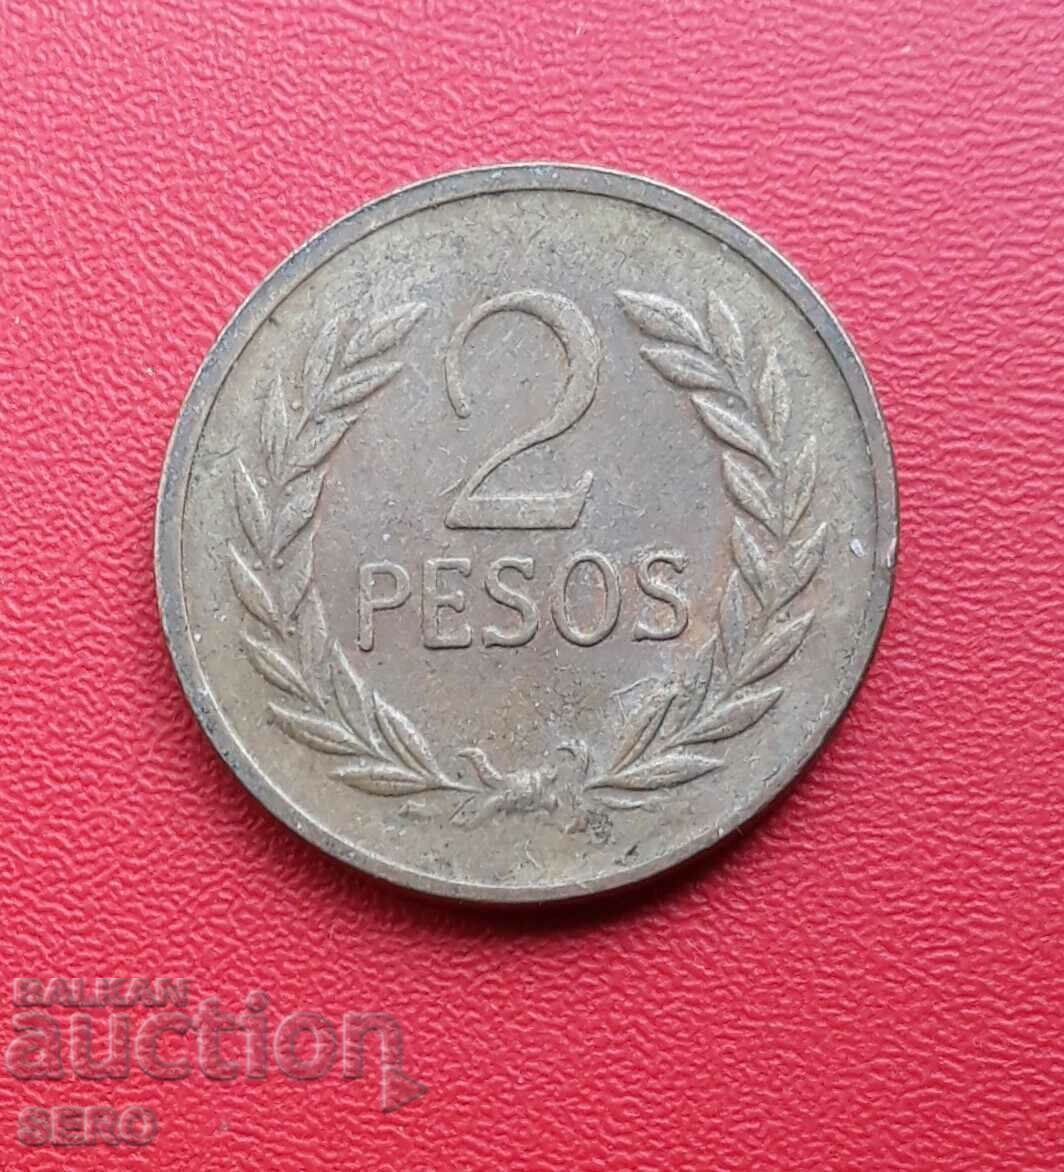 Columbia - 2 pesos 1977